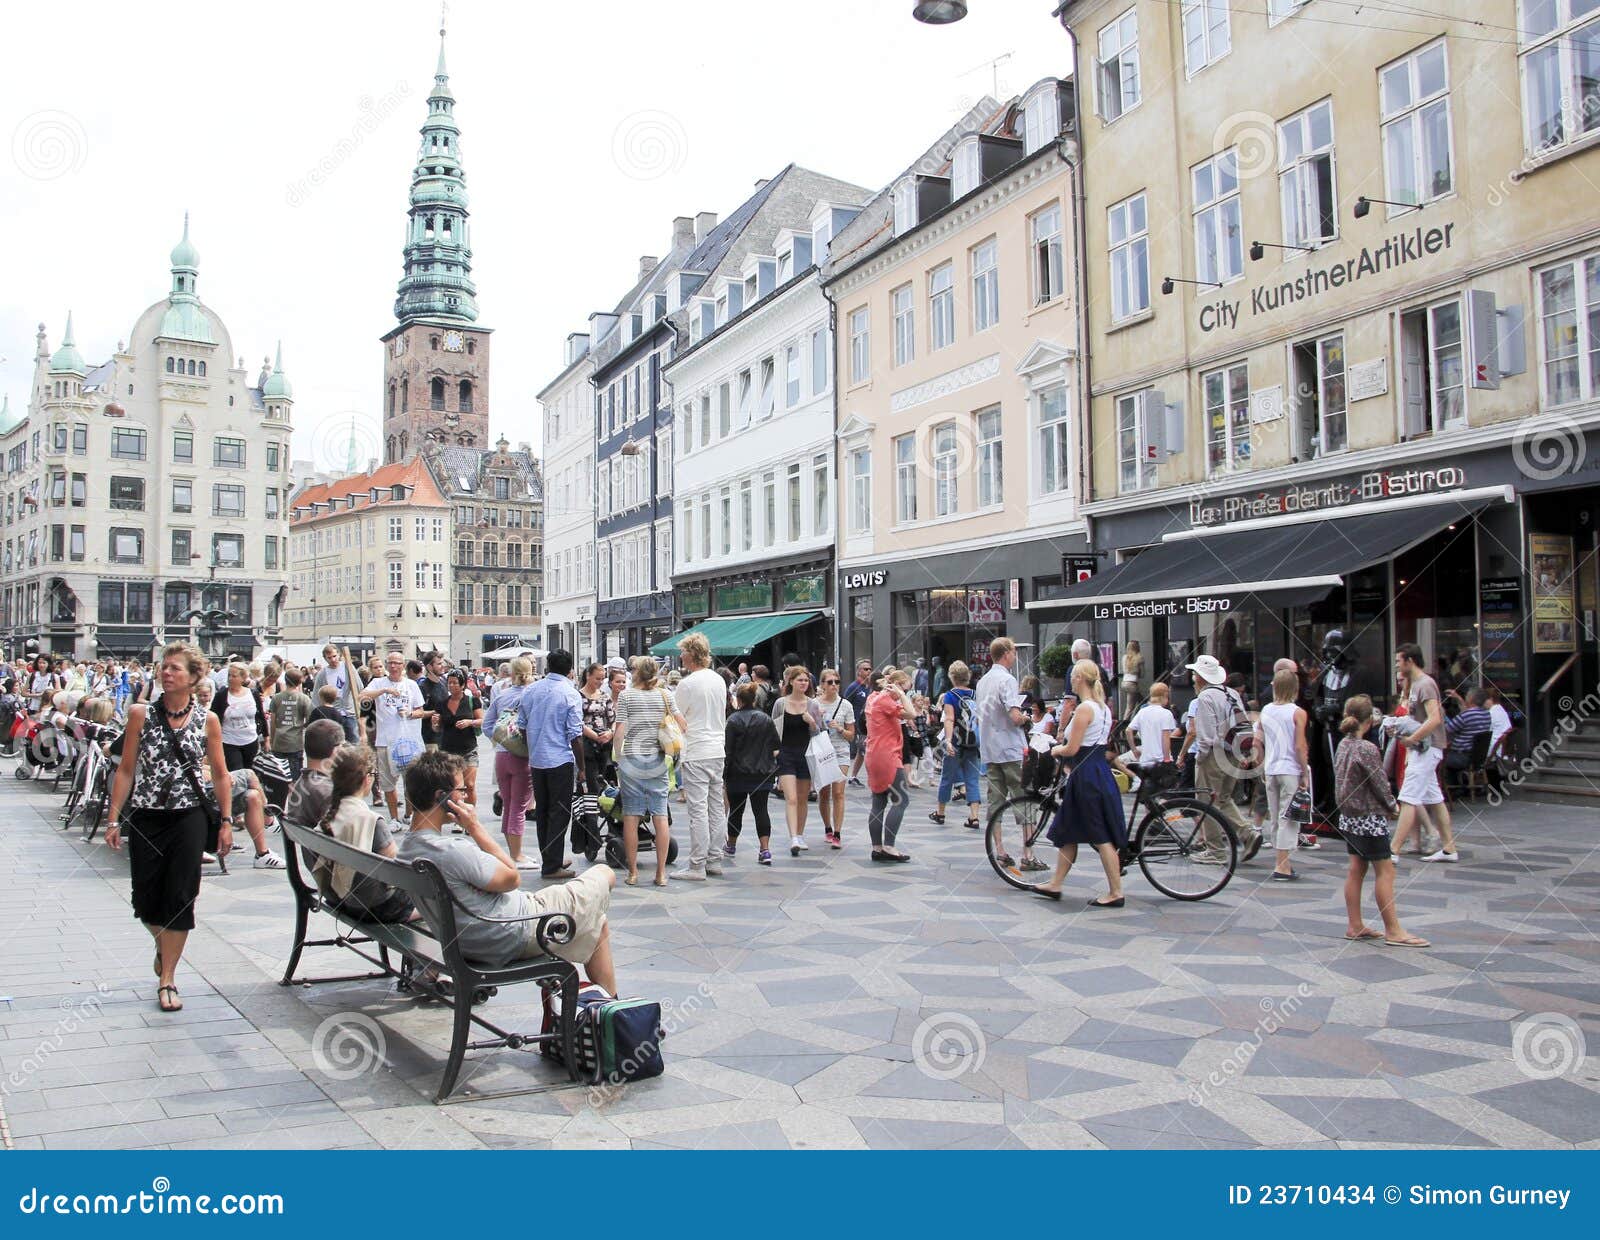 Stroget Shopping Street Copenhagen Denmark Editorial Stock Image ...